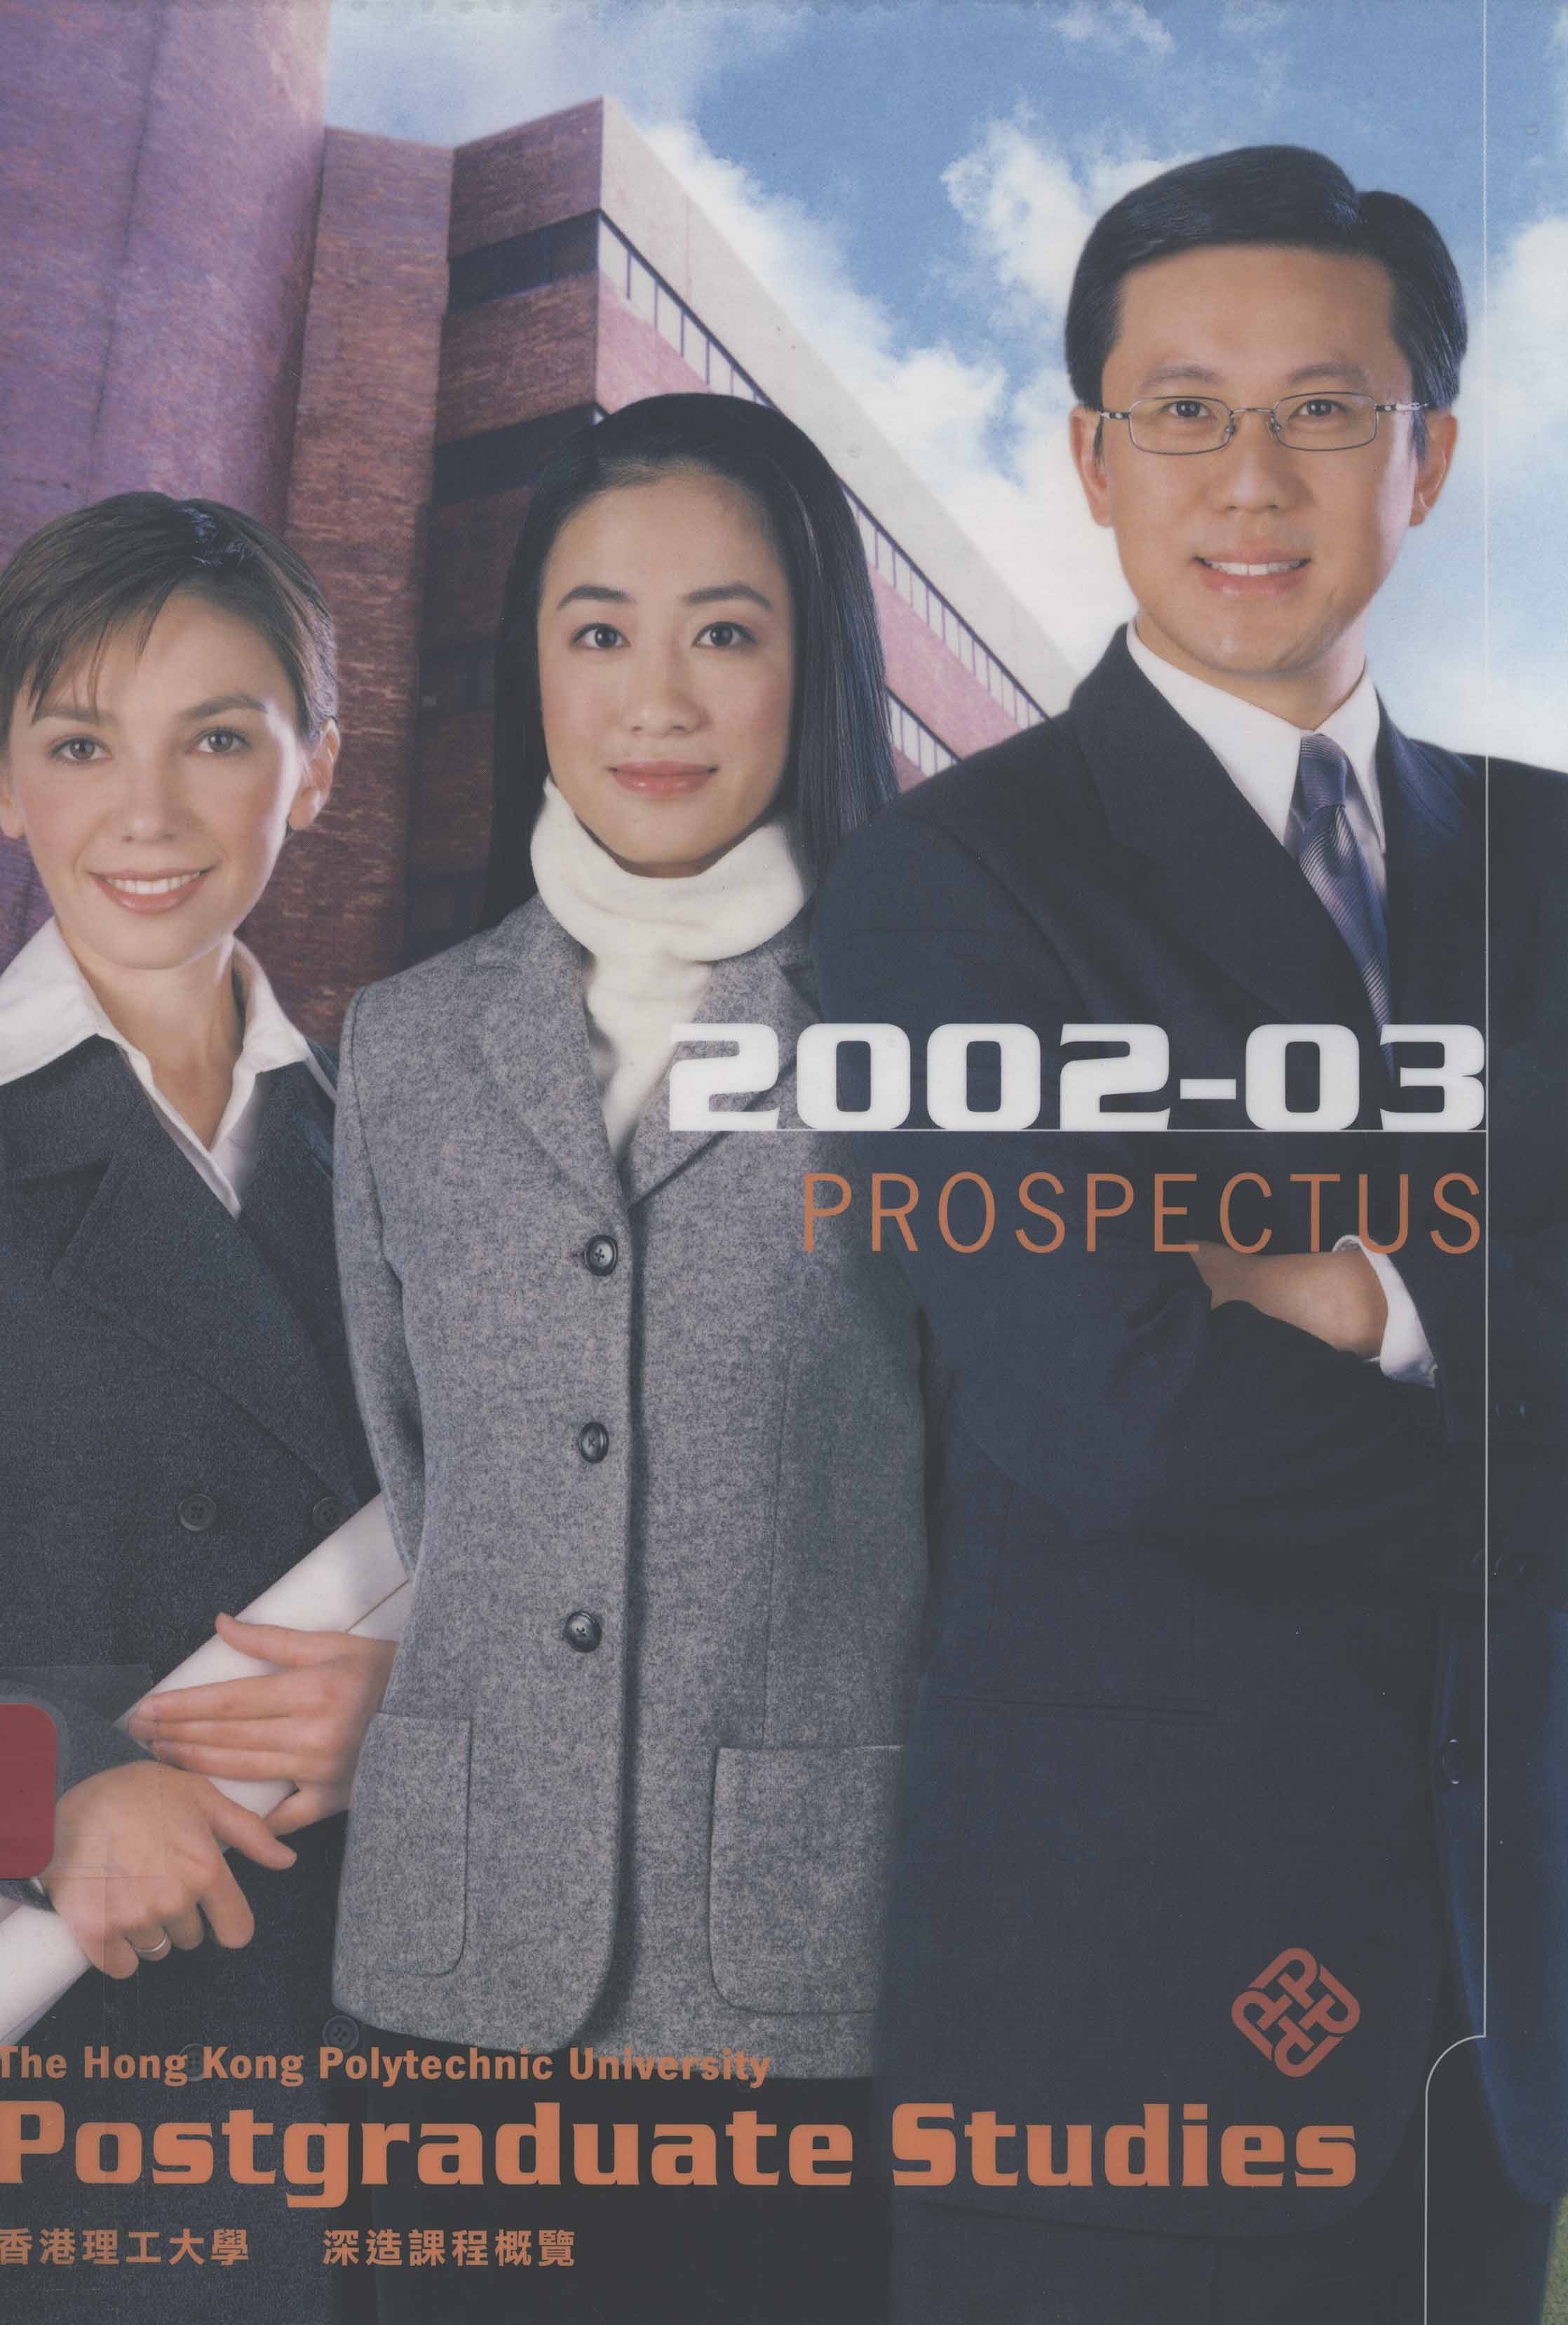 Hong Kong Polytechnic University. Prospectus. Postgraduate studies 2002/03